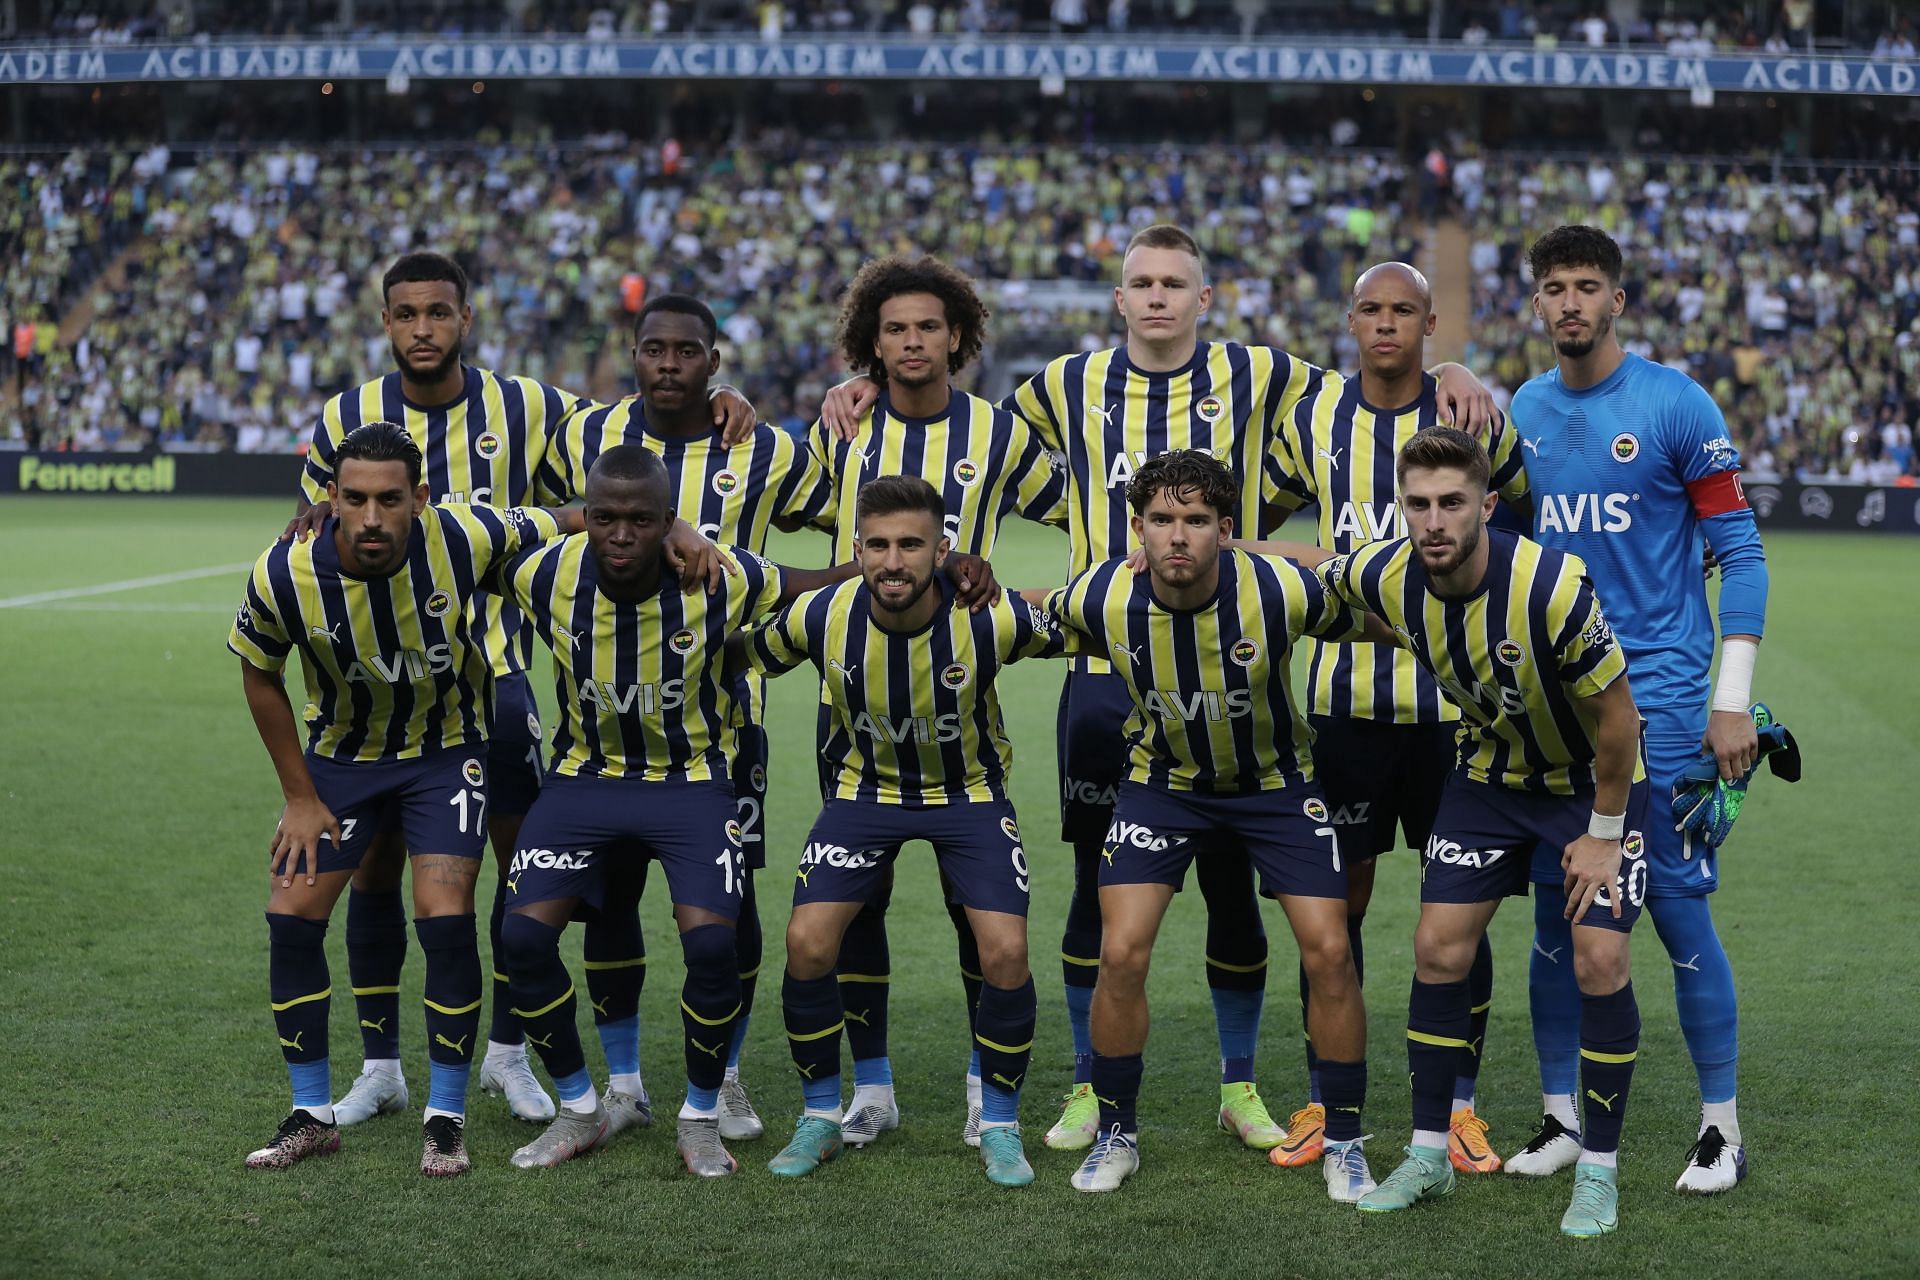 Tombense vs Ponte Preta: A Clash Between Two Brazilian Football Clubs